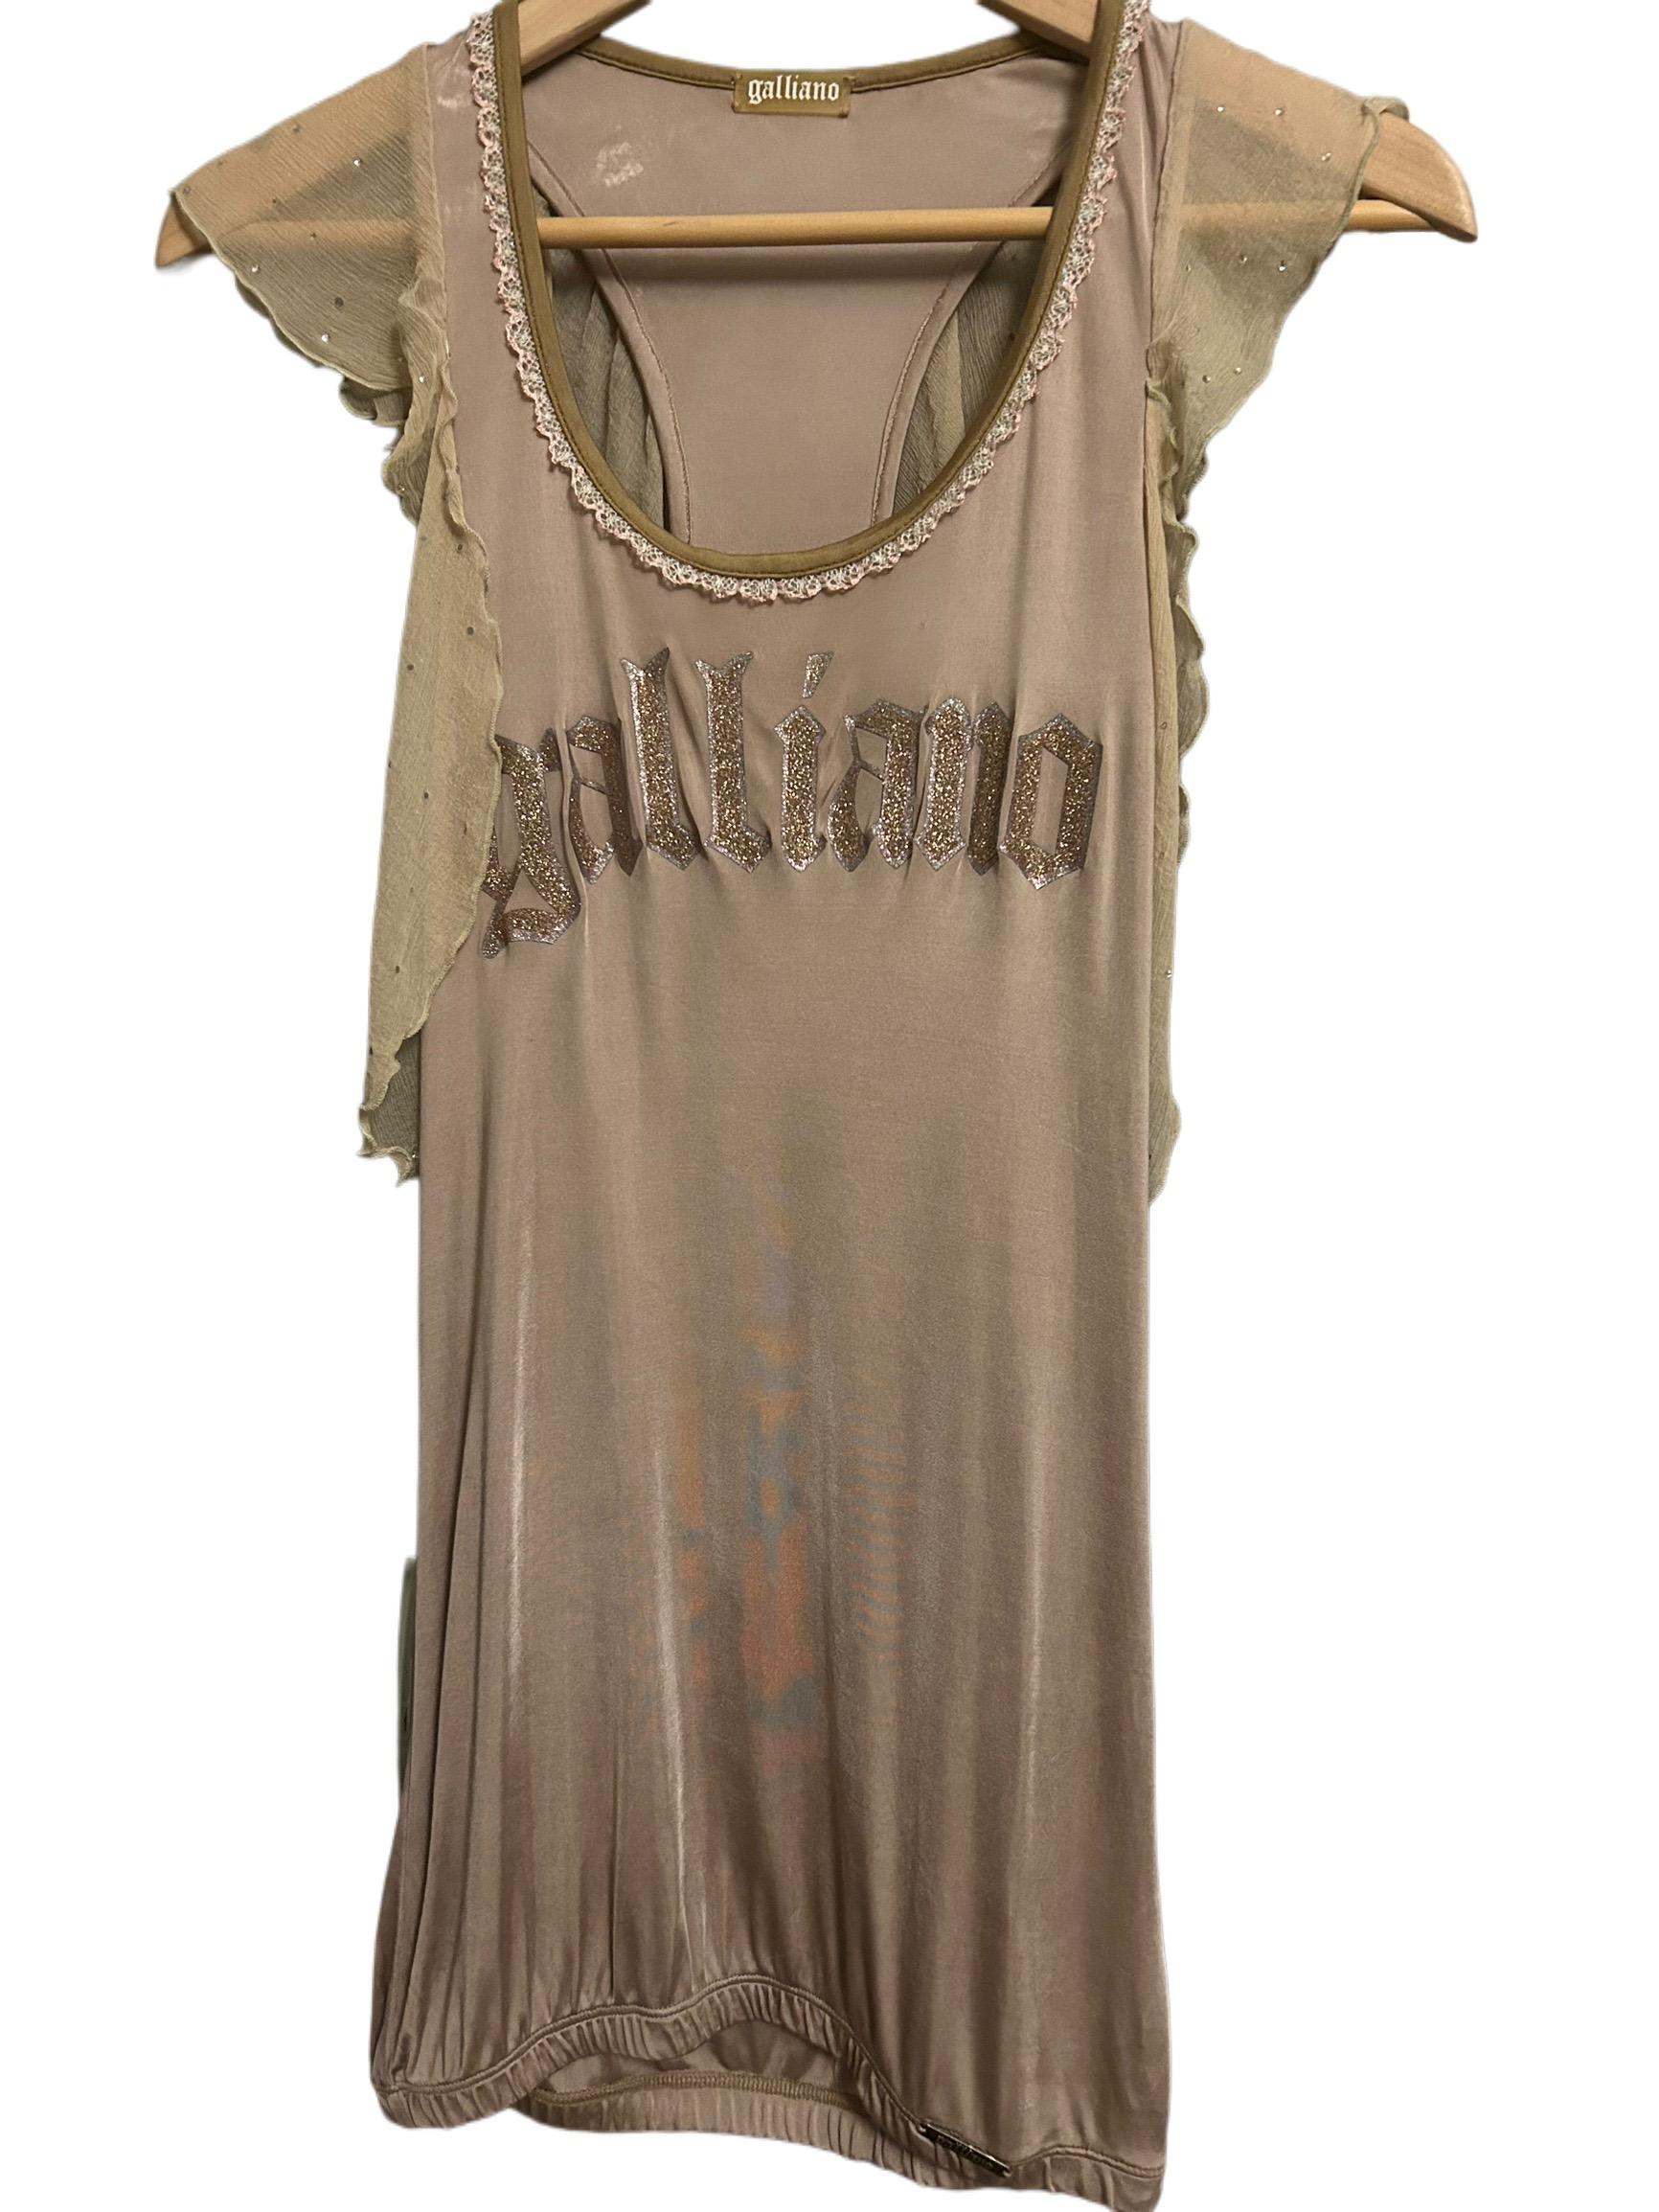 Vintage John Galliano Ladies top 5